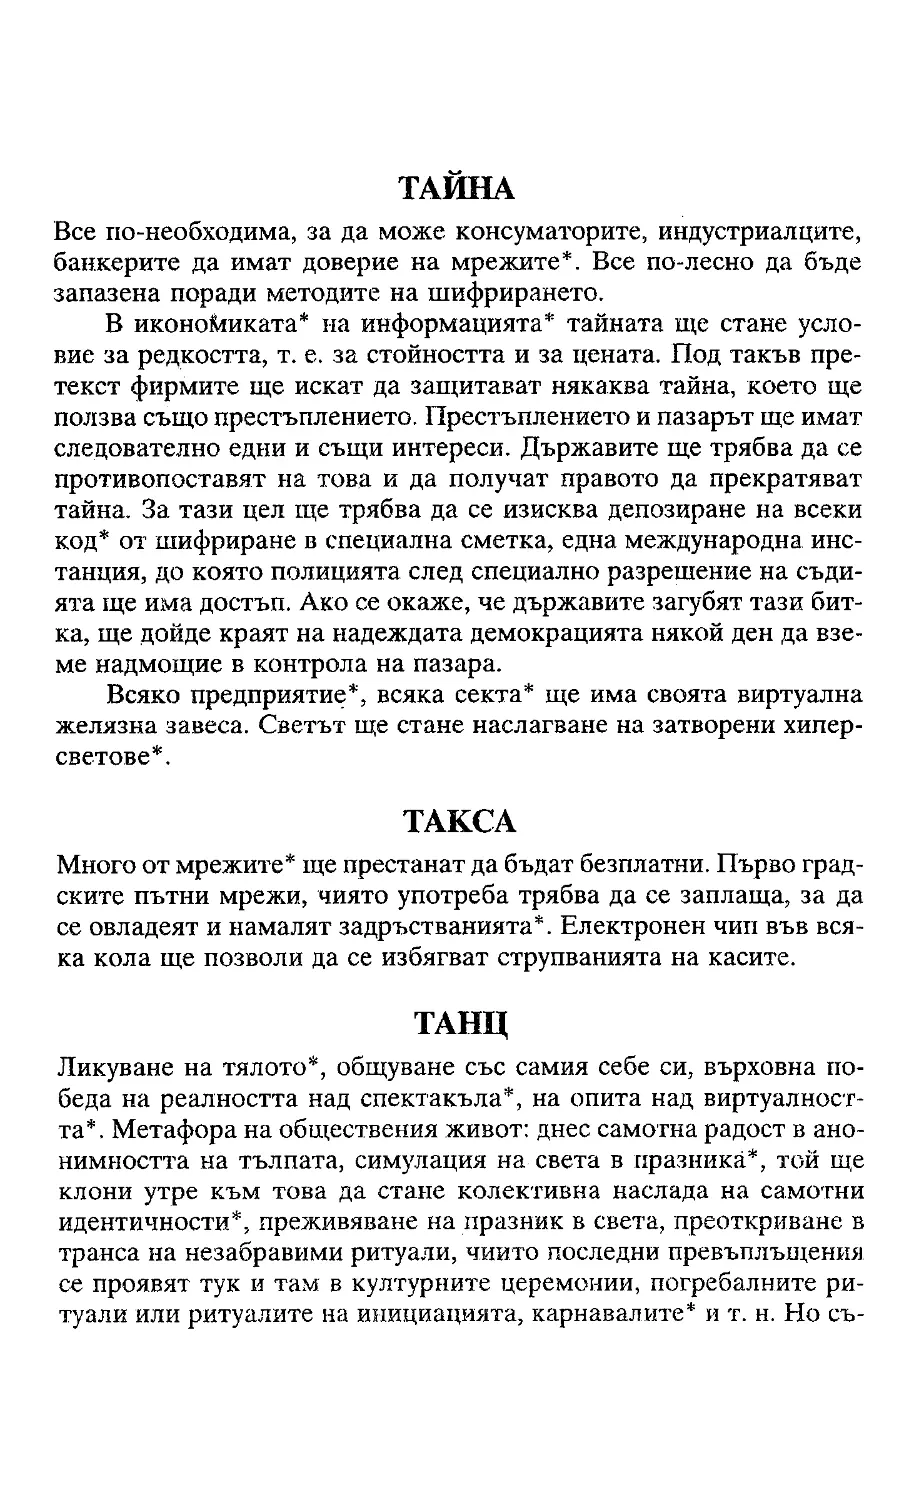 ﻿Жак Атали. Речник на 21 век_Page_111_Image_0001_2